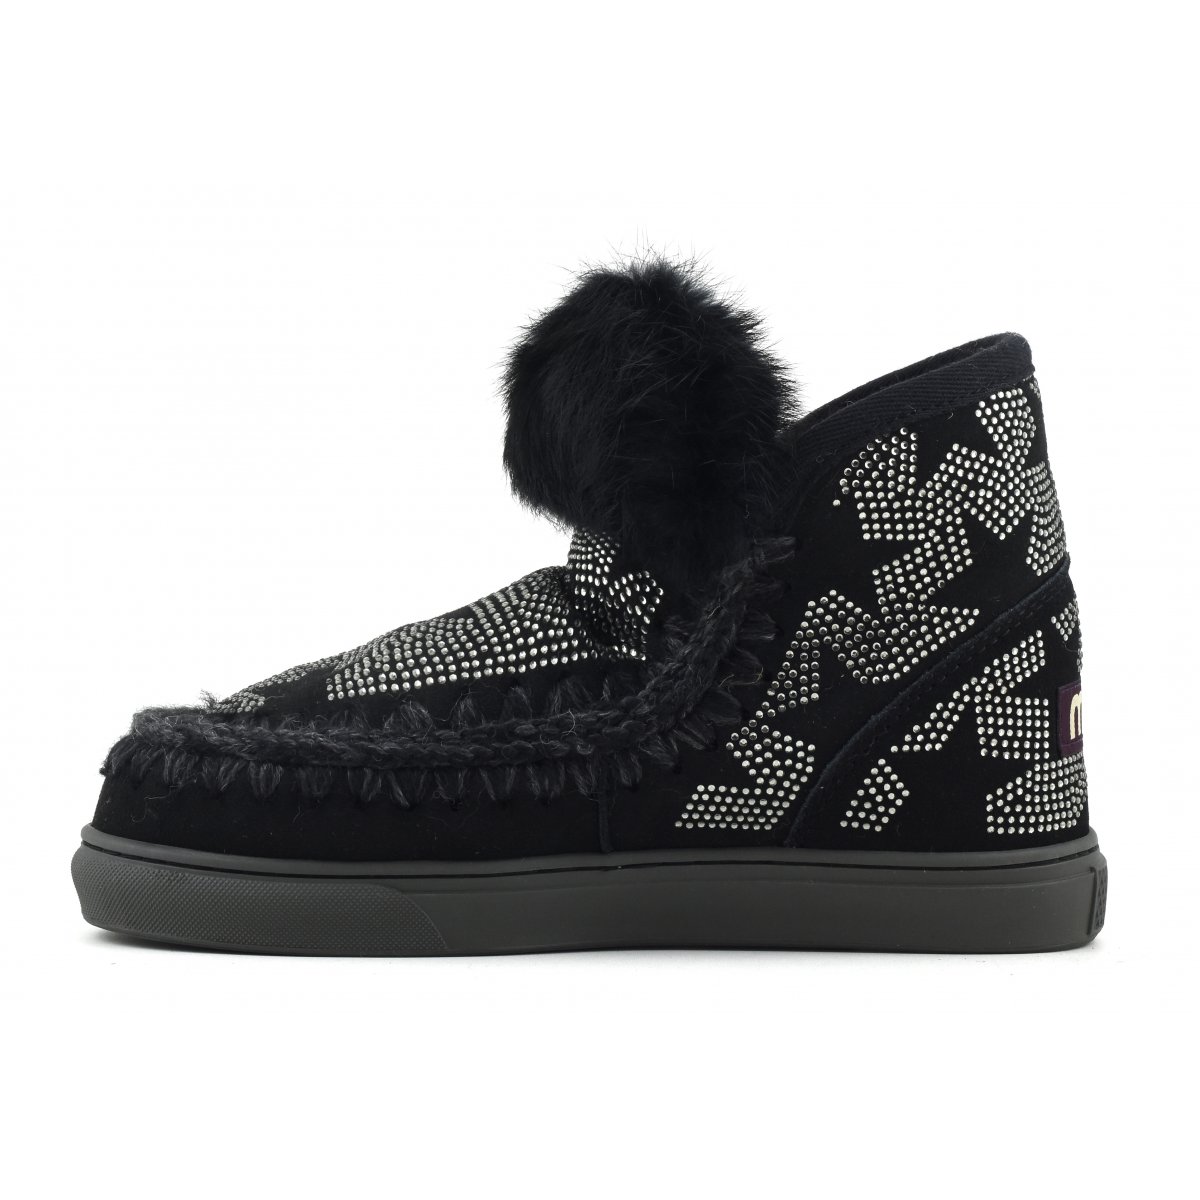 Eskimo sneaker hotfix stars pattern & fur trim BKBK img 5